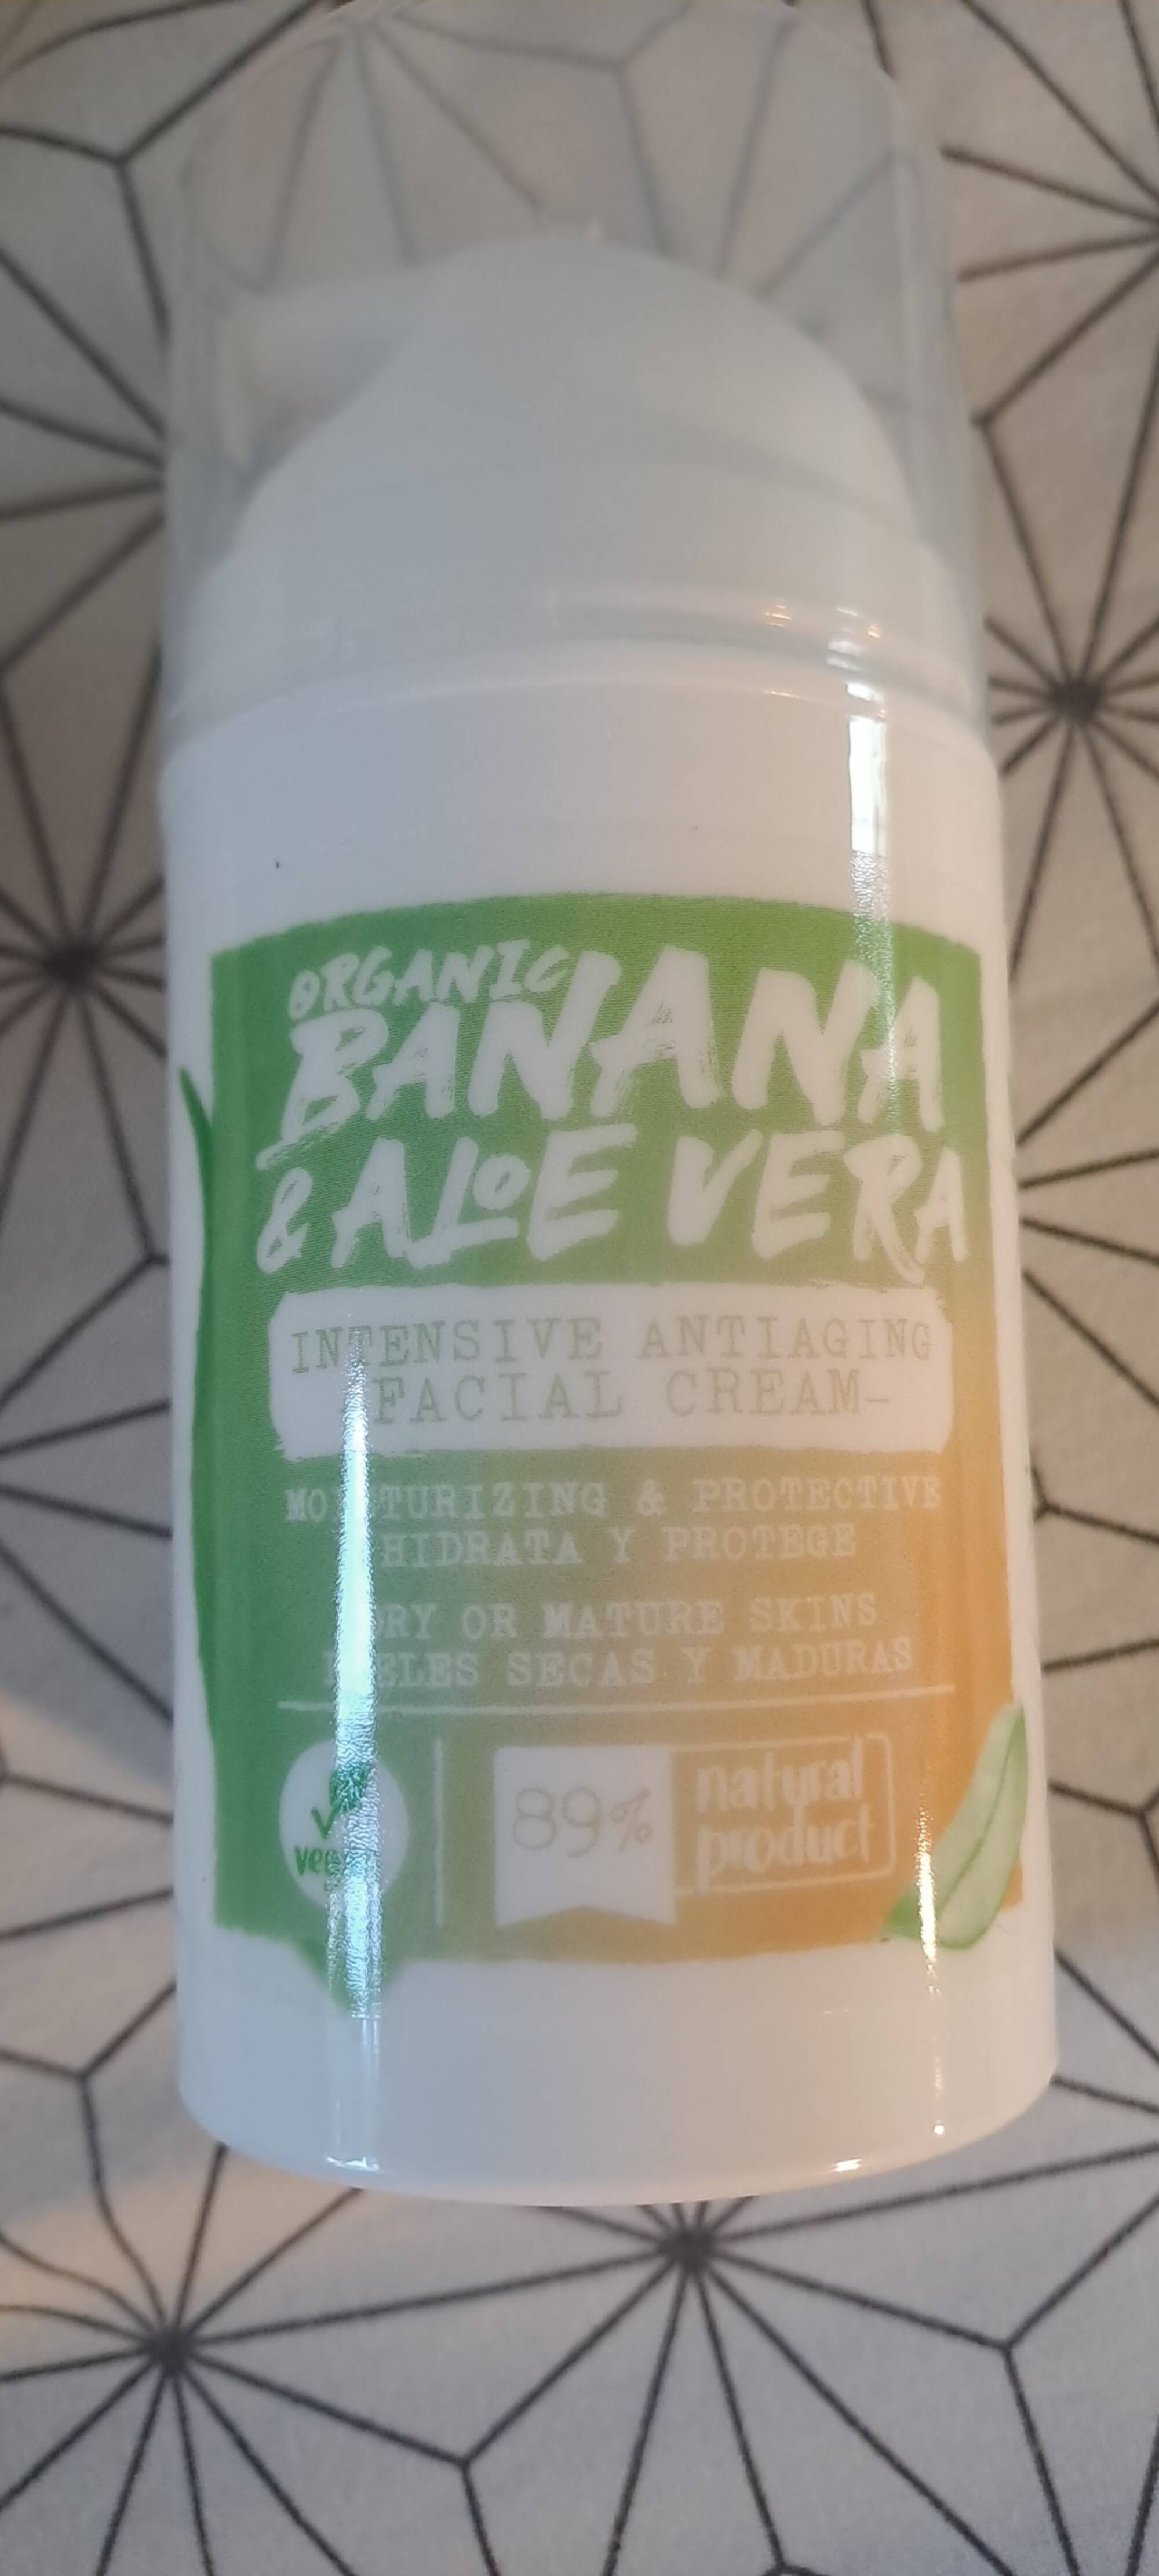 MUSSA CANARIA - Oragnic banana & aloe vera - Intensive antiaging facial cream